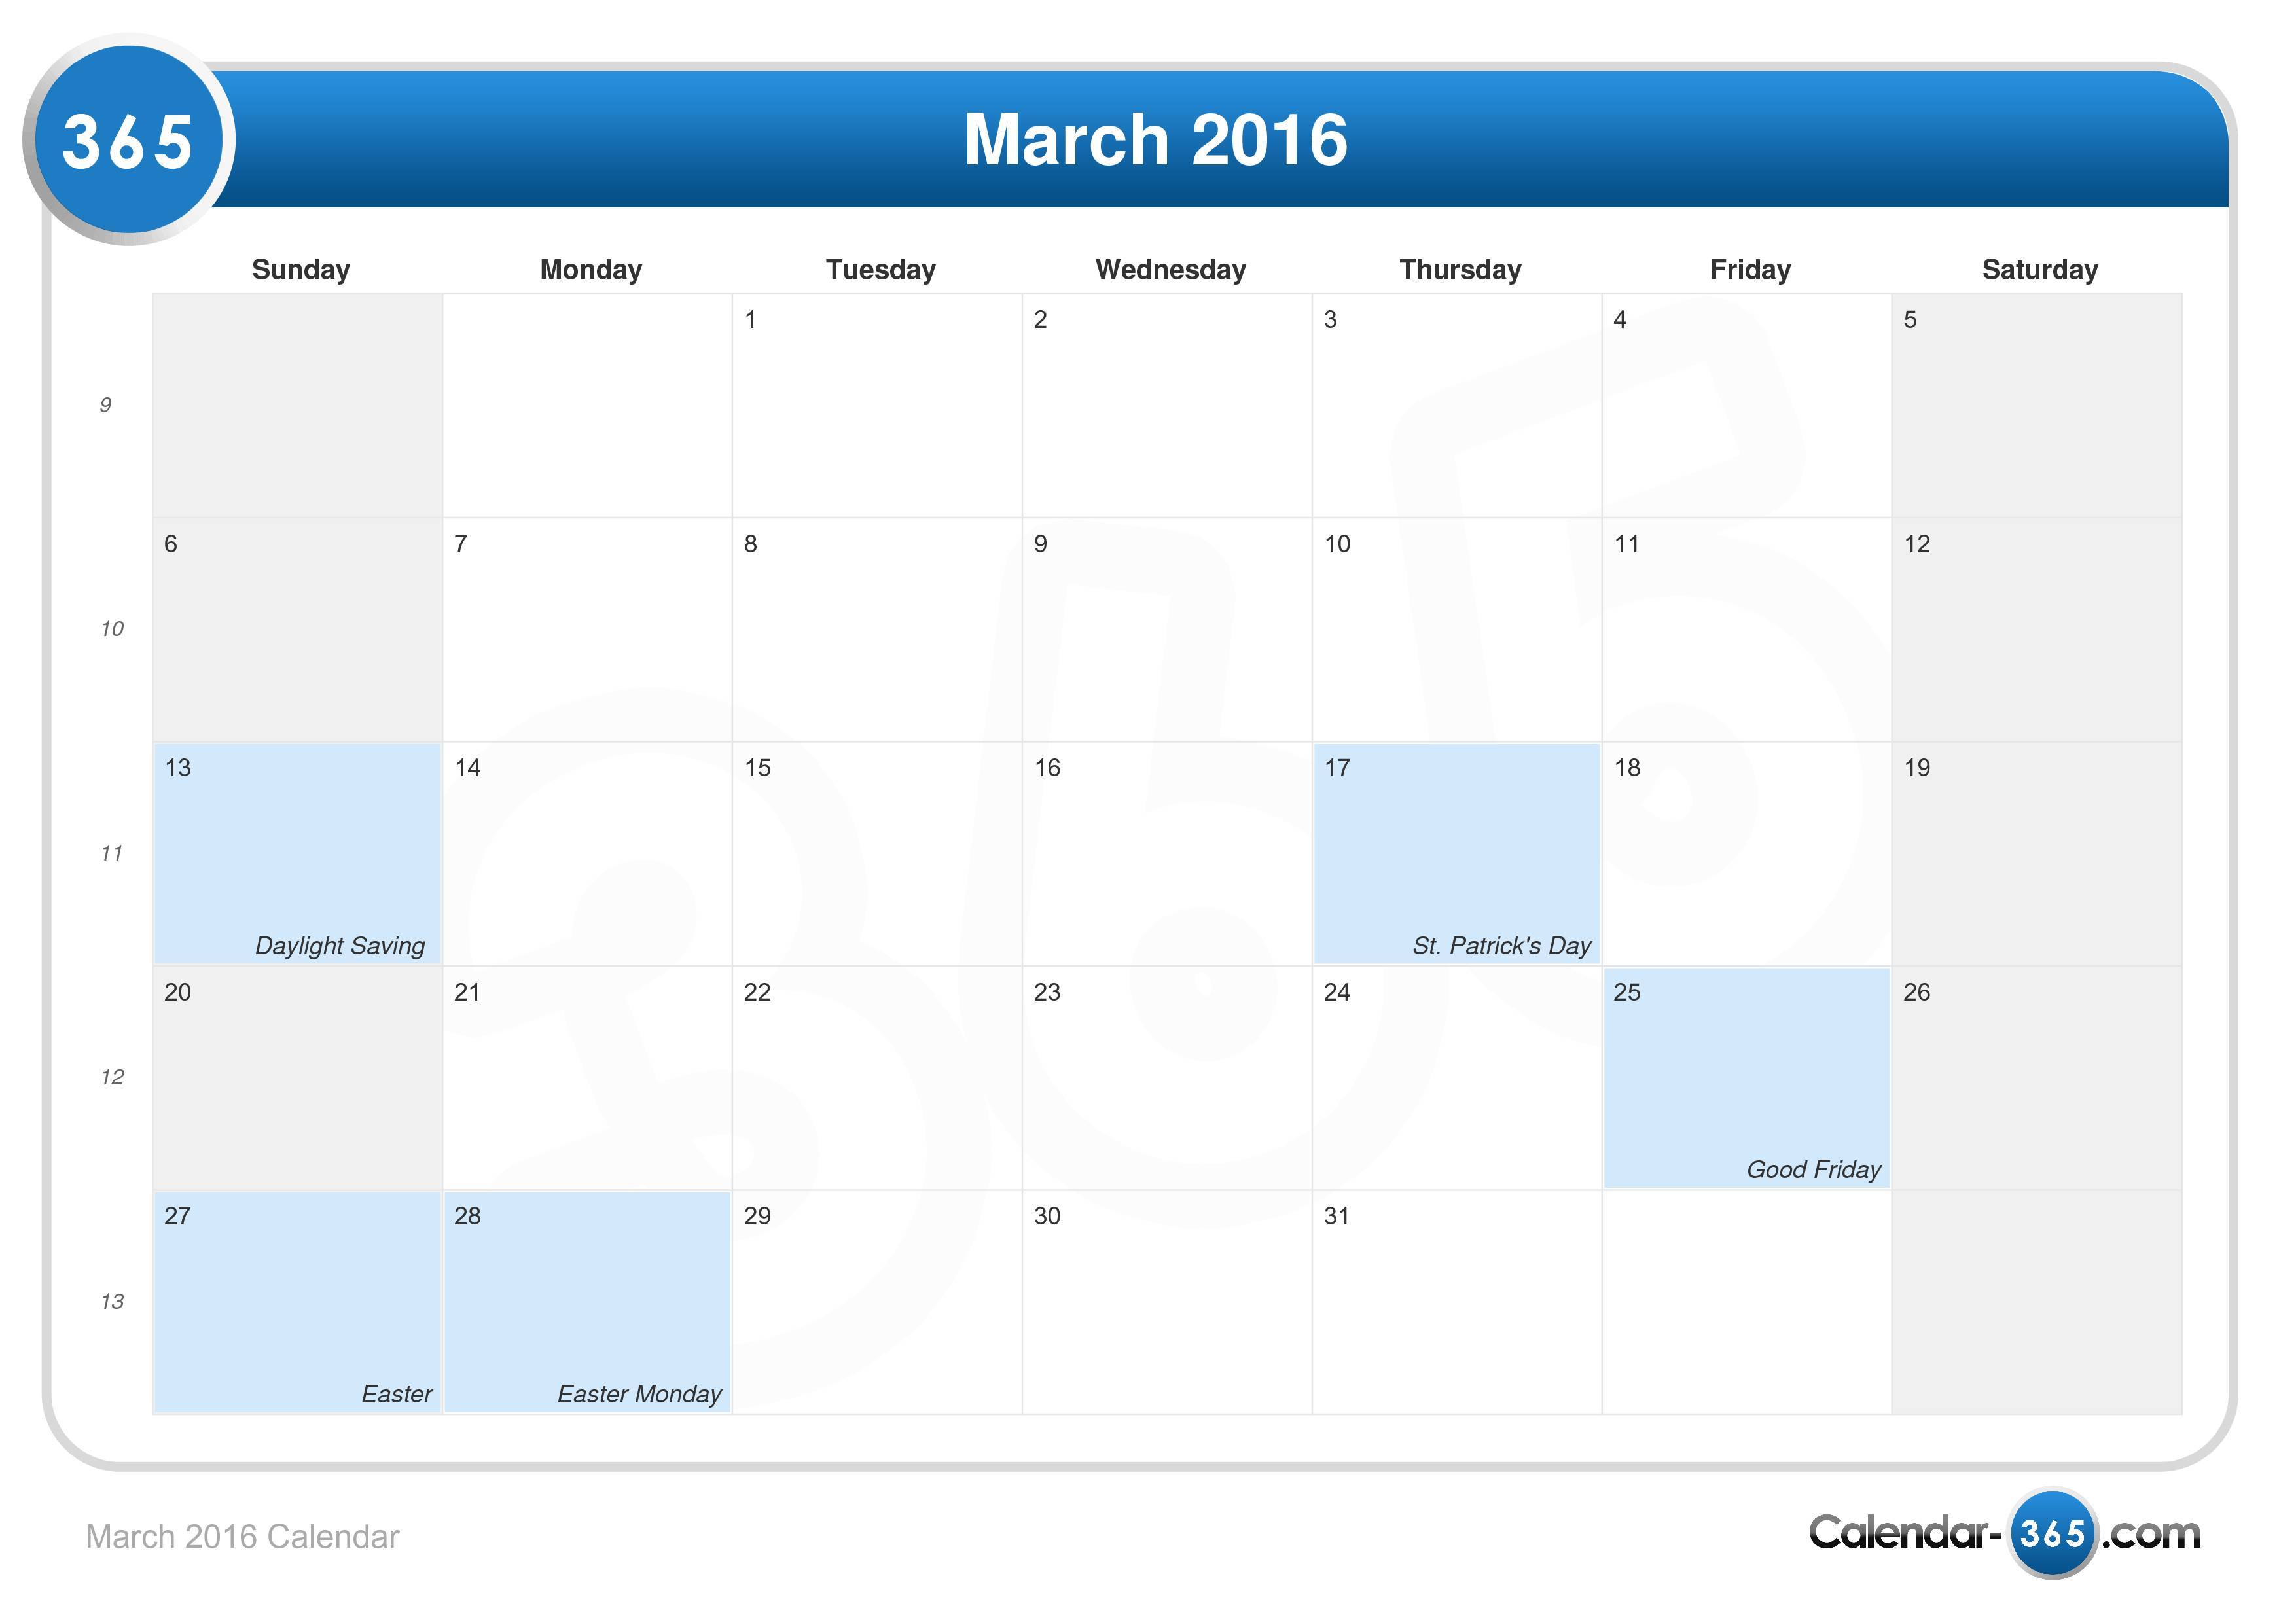 https://www.calendar-365.com/jpg/march-2016-calendar.jpg